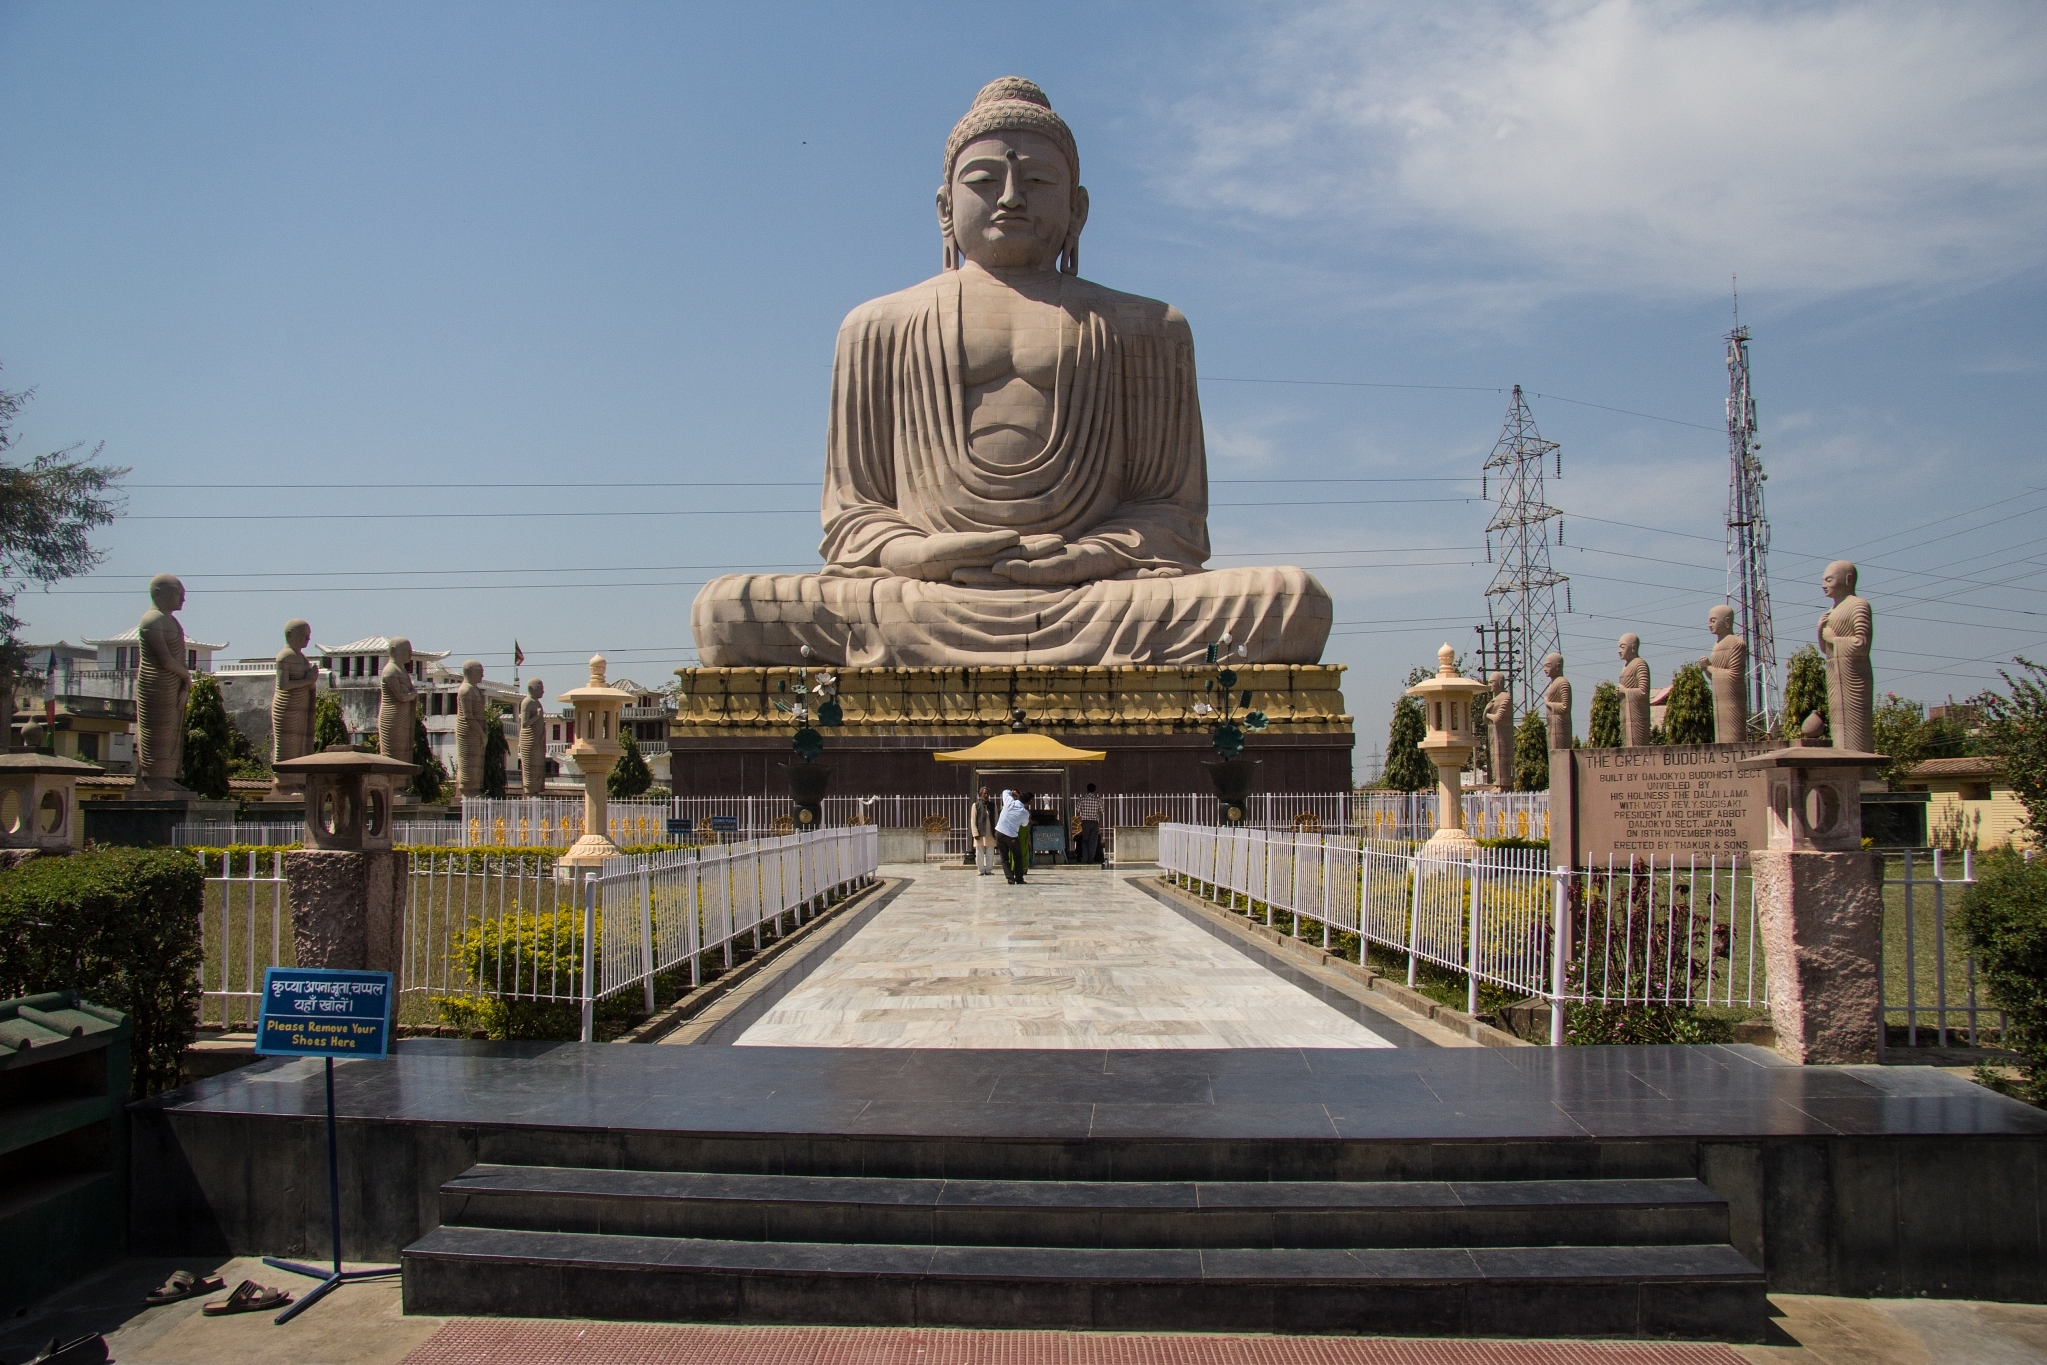 The Greta Buddha Statue at Bodh Gaya (<a href="https://www.flickr.com/people/84985982@N00">Andrew Moore</a>/Flickr)